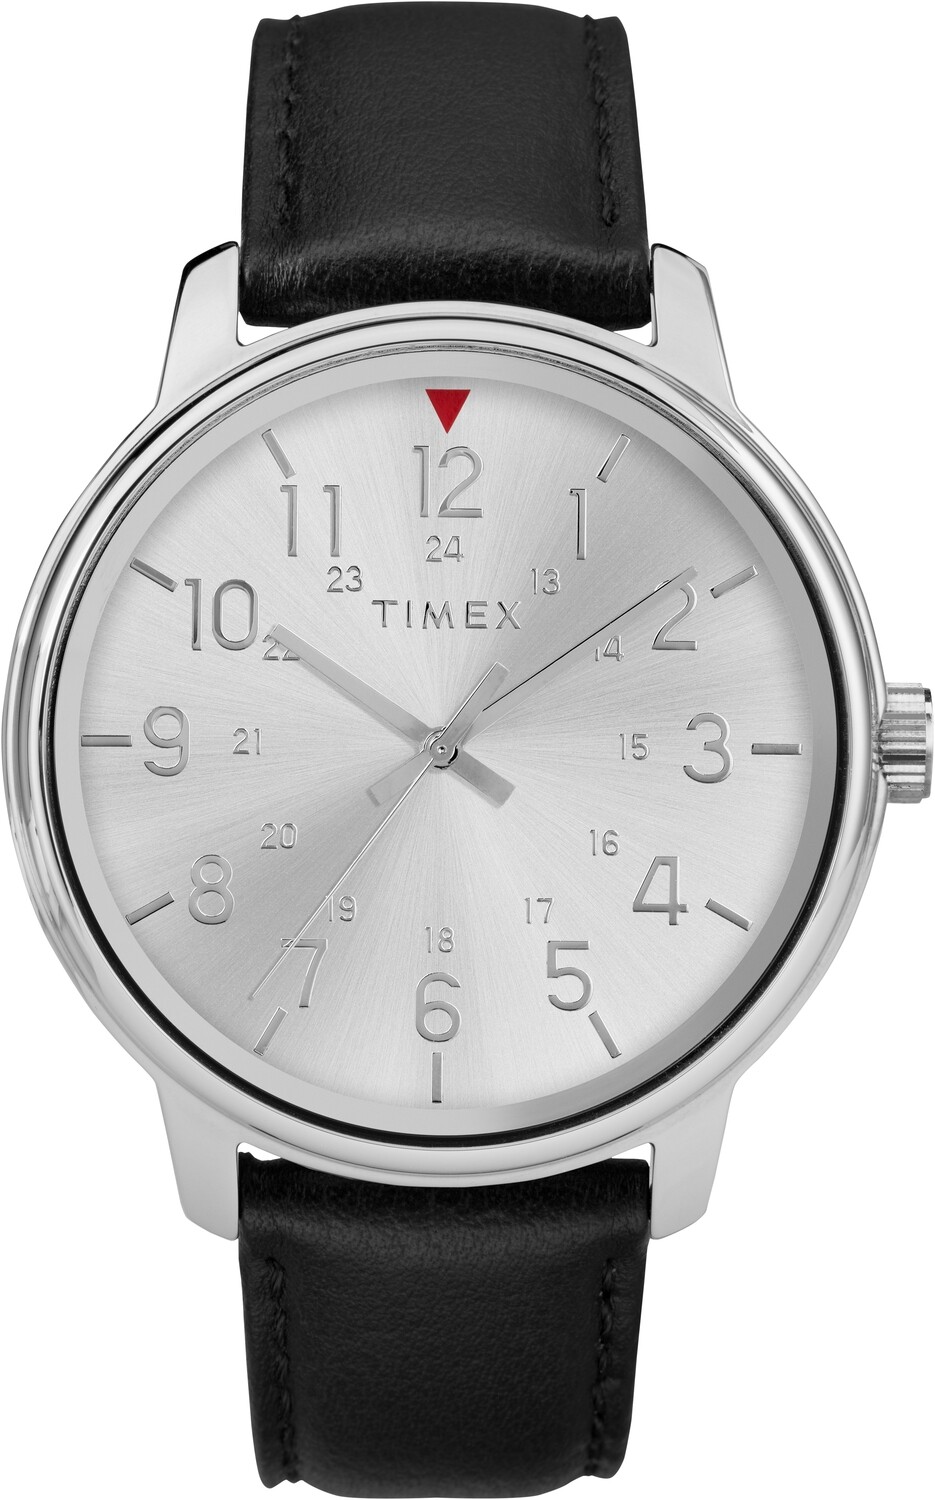 Timex TW2R85300 Men's Black Leather Strap Watch